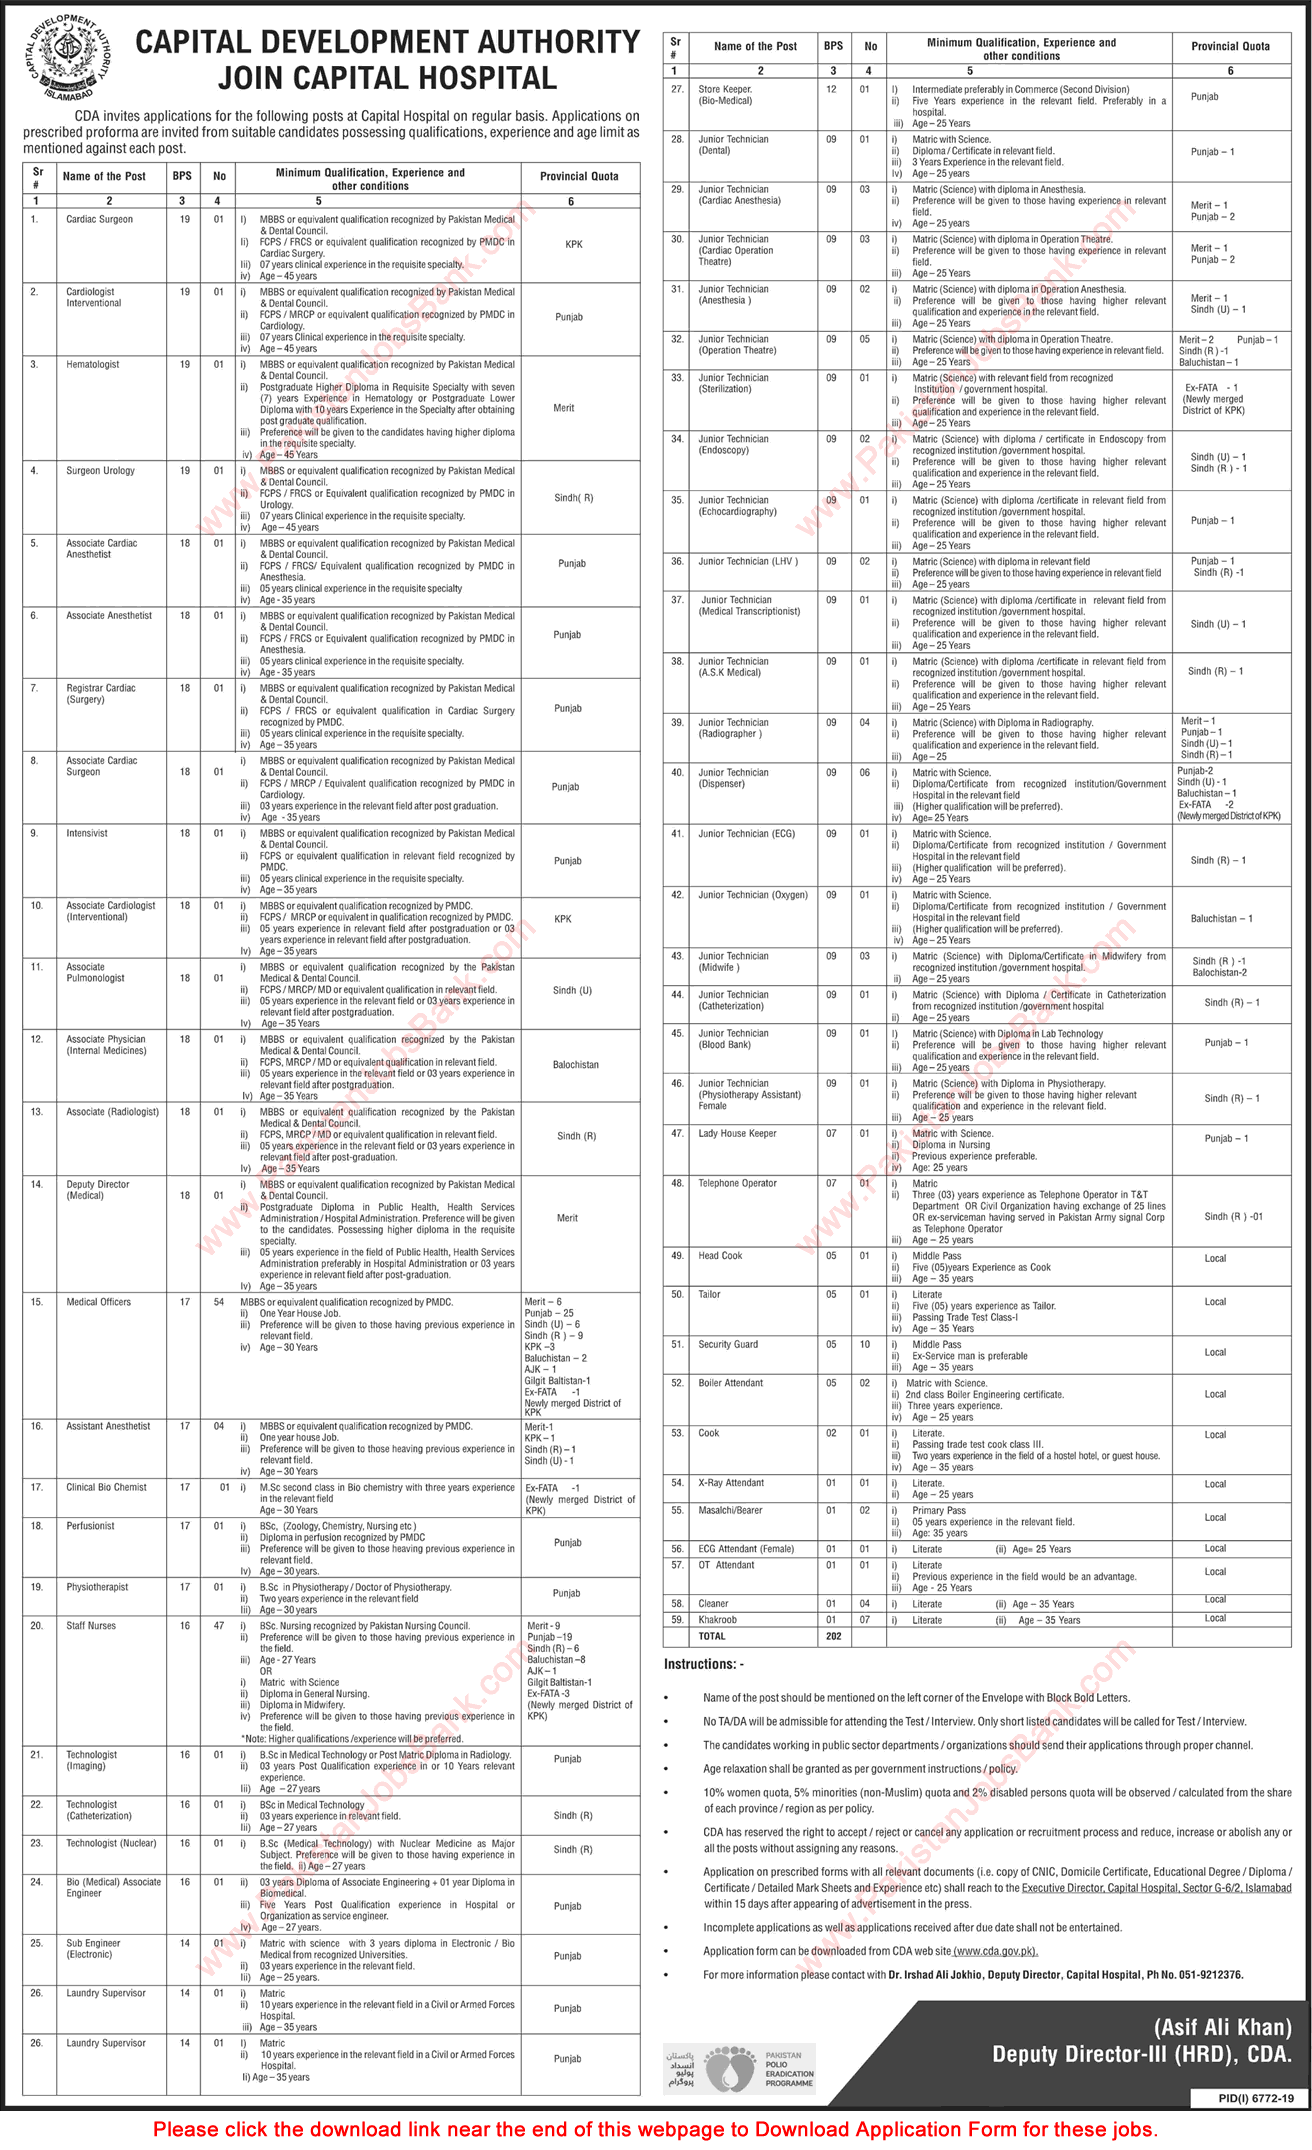 CDA Hospital Islamabad Jobs June 2020 Application Form Medical Officers, Nurses & Others Latest